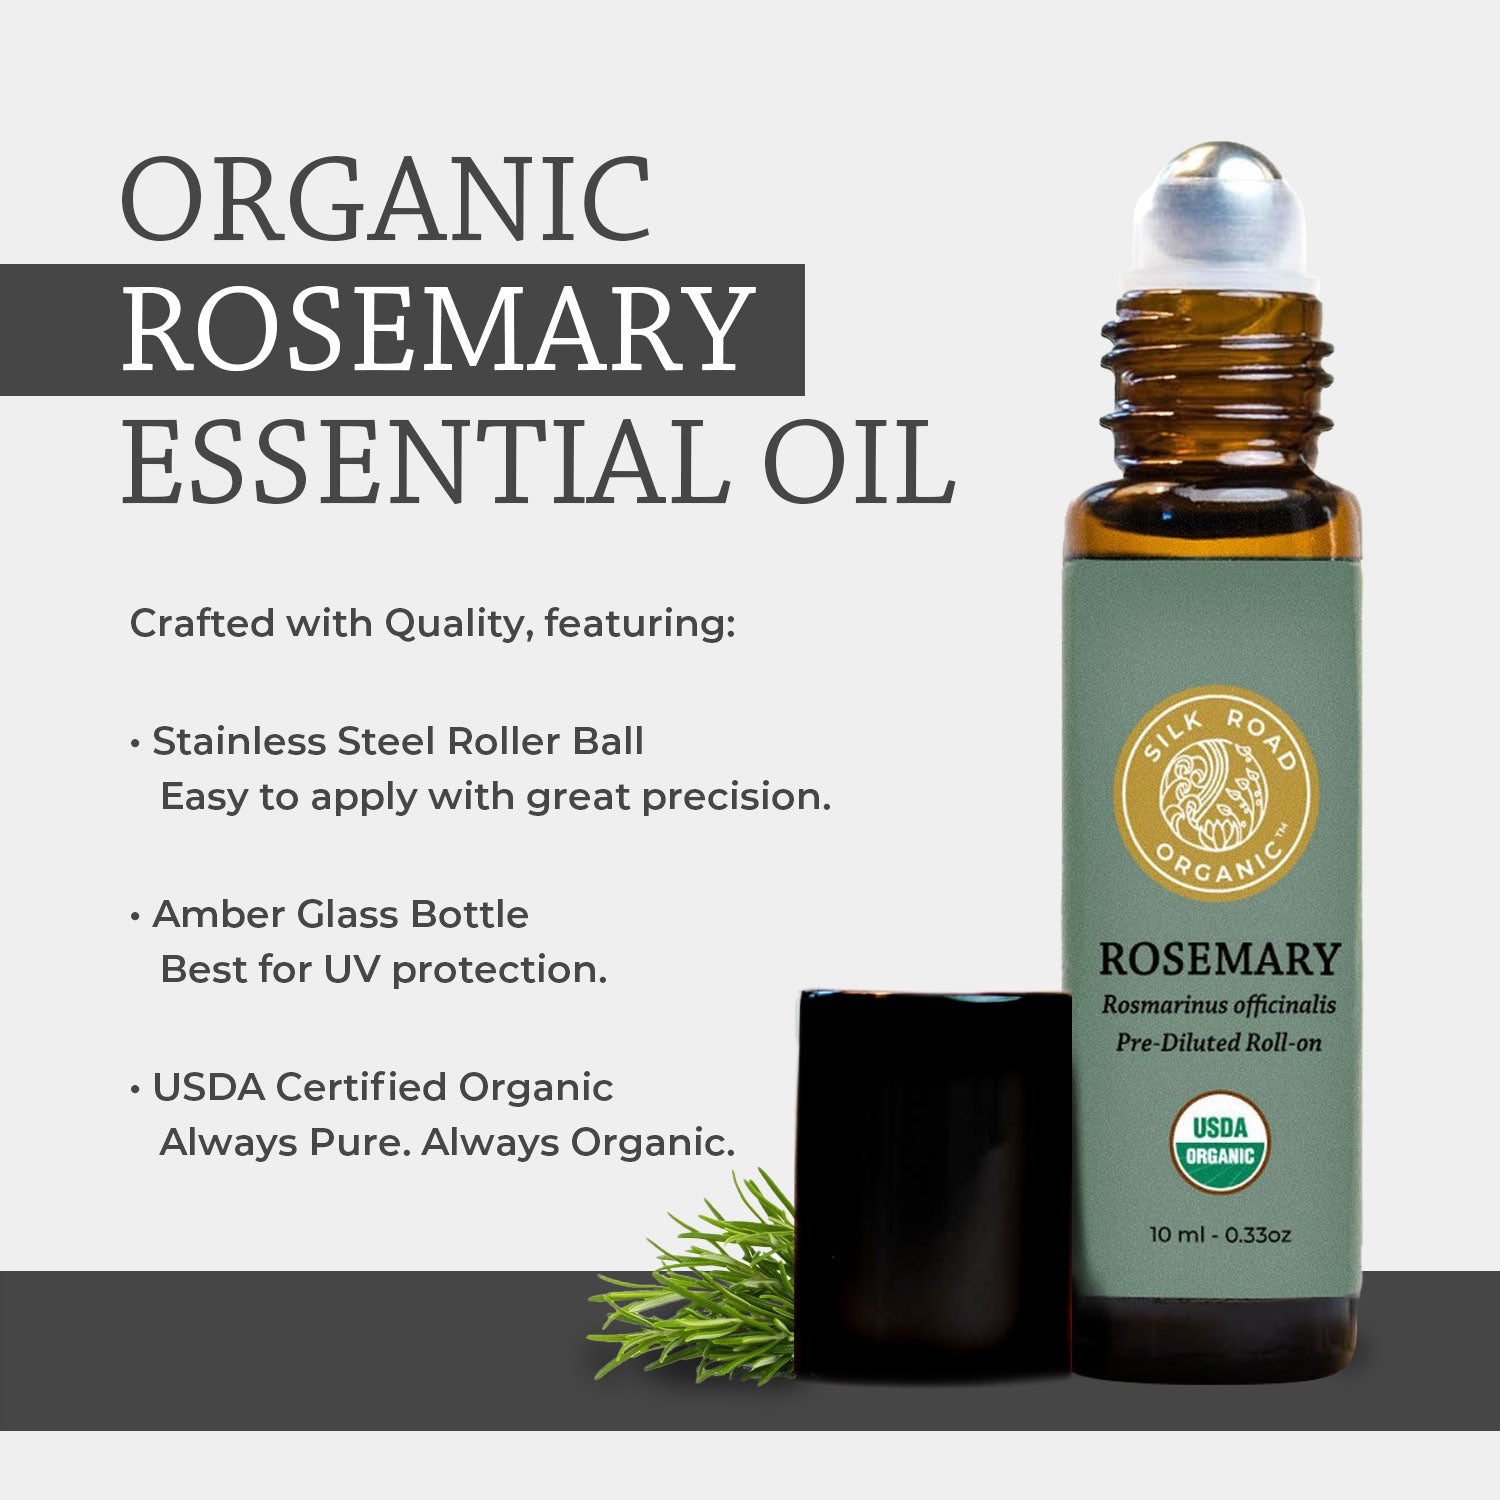 USDA Organic ROSEMARY Essential Oil Roll-on